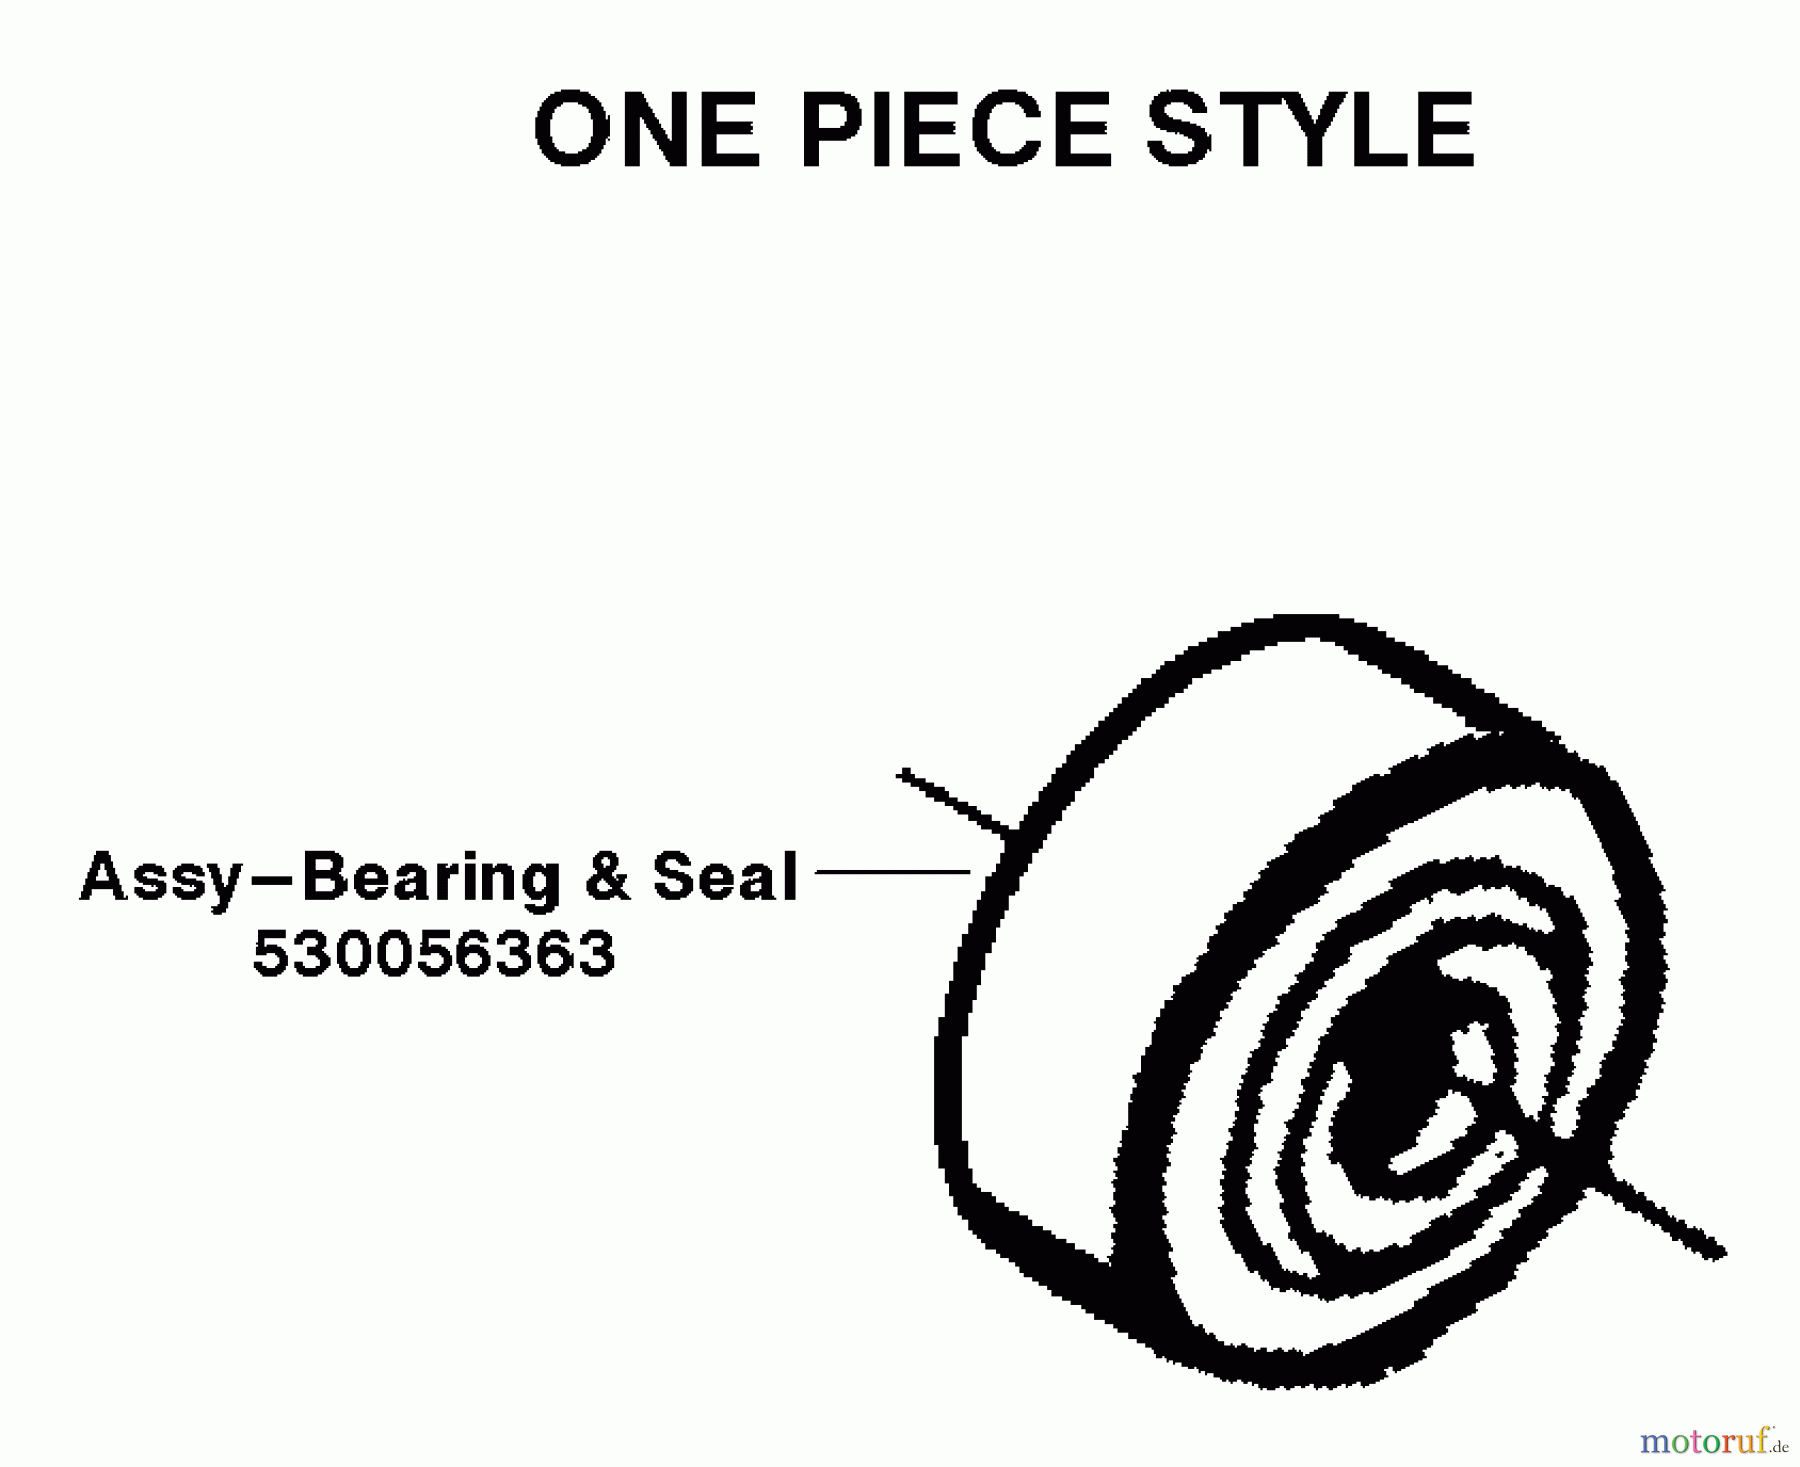  Poulan / Weed Eater Motorsägen 2775 (Type 2) - Poulan Chainsaw Bearing & Seal - One Piece Style